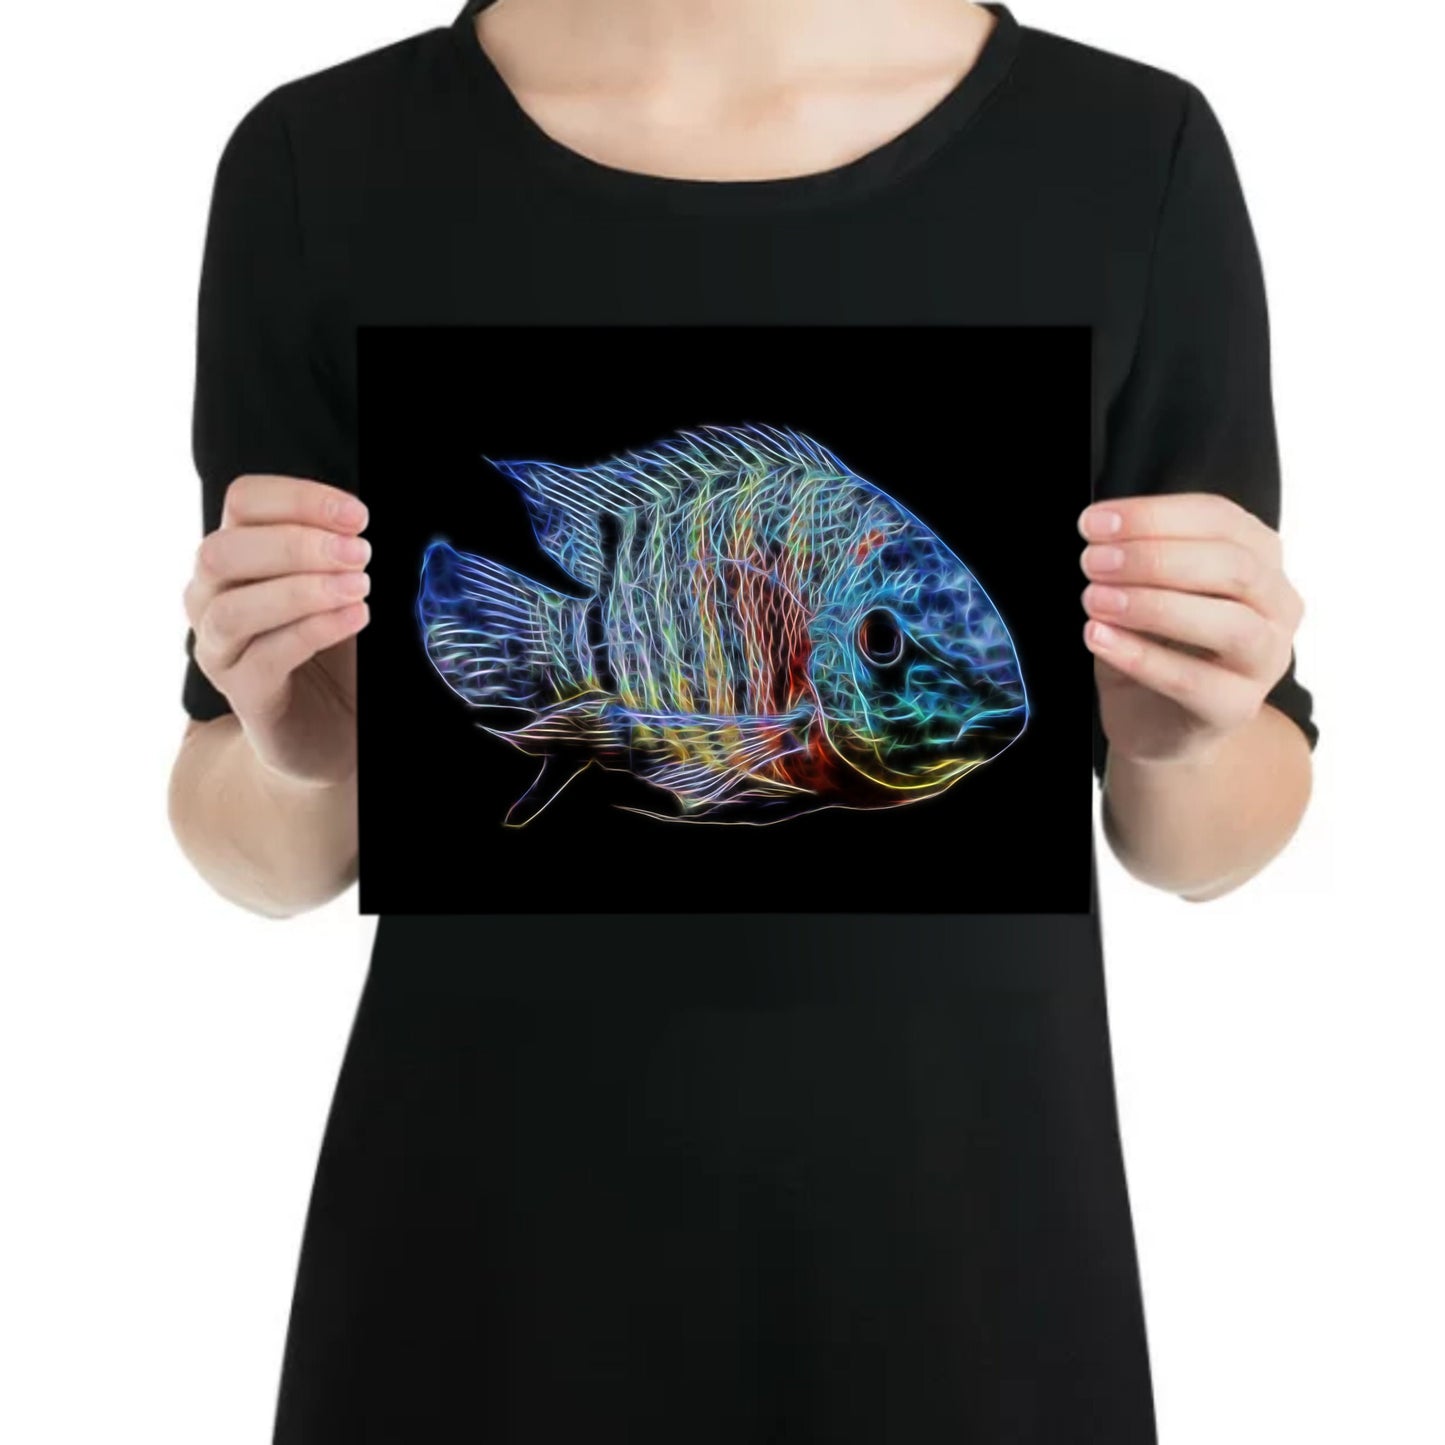 Red Tiger Severum Cichlid Fish Print with Stunning Fractal Art Design. Heros severus